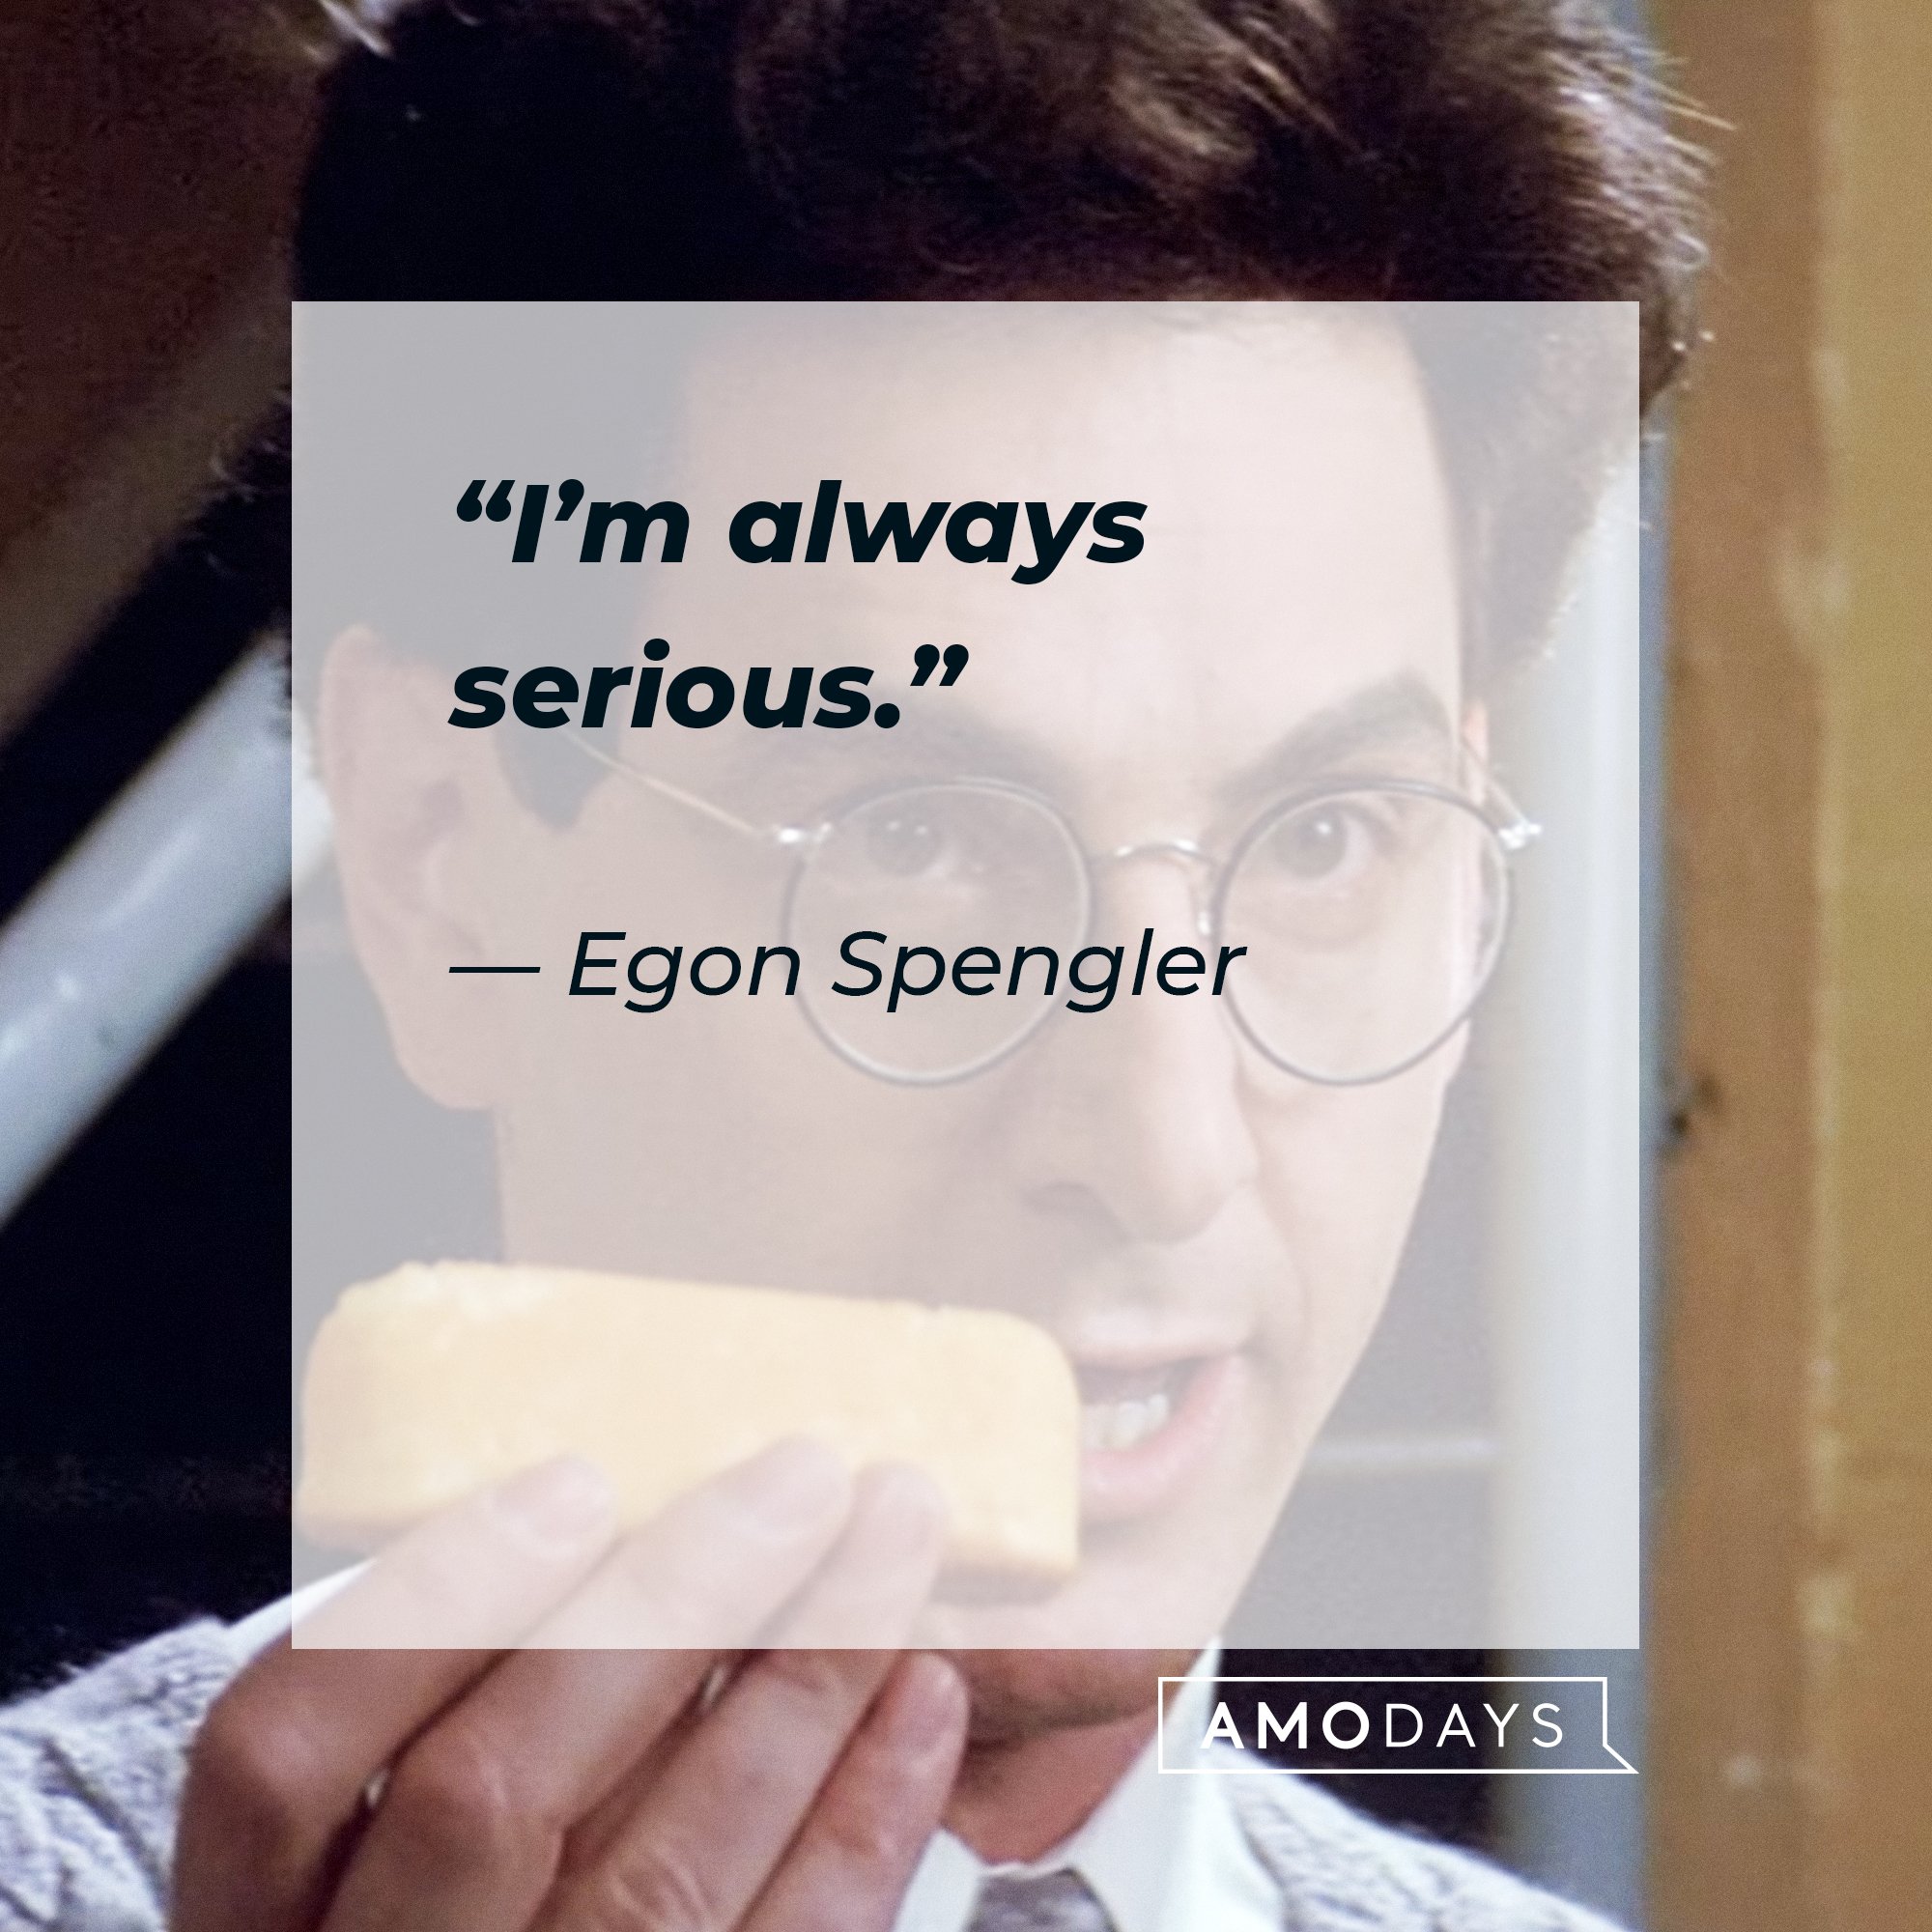 Egon Spengler's quote: “I’m always serious.” | Image: AmoDays